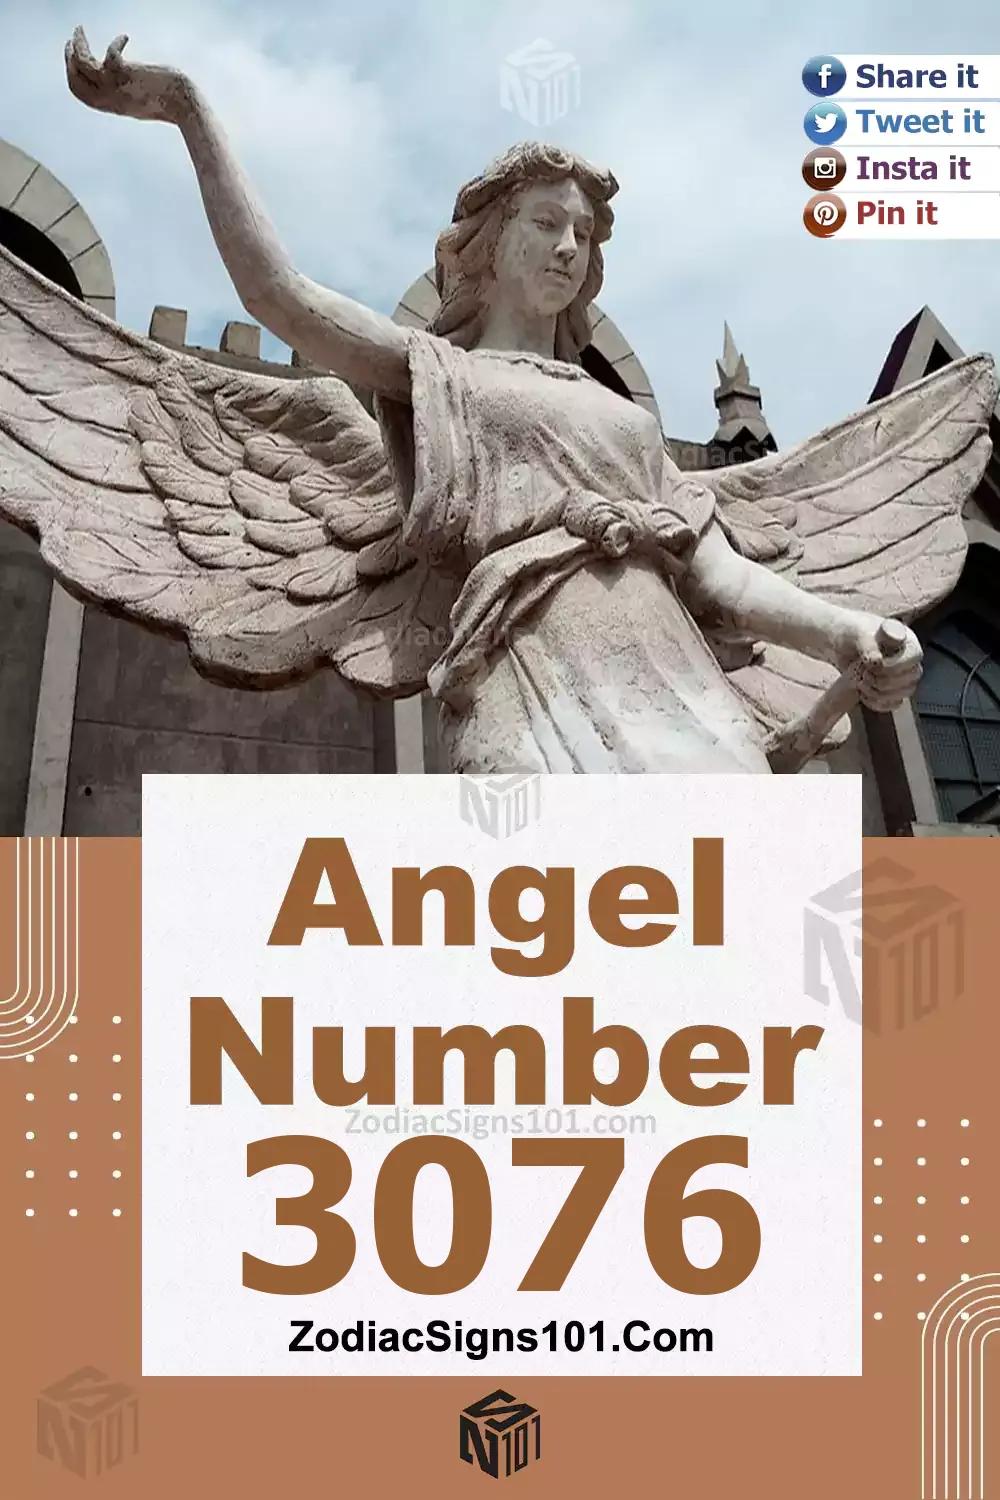 3076-Angel-Number-Meaning.jpg